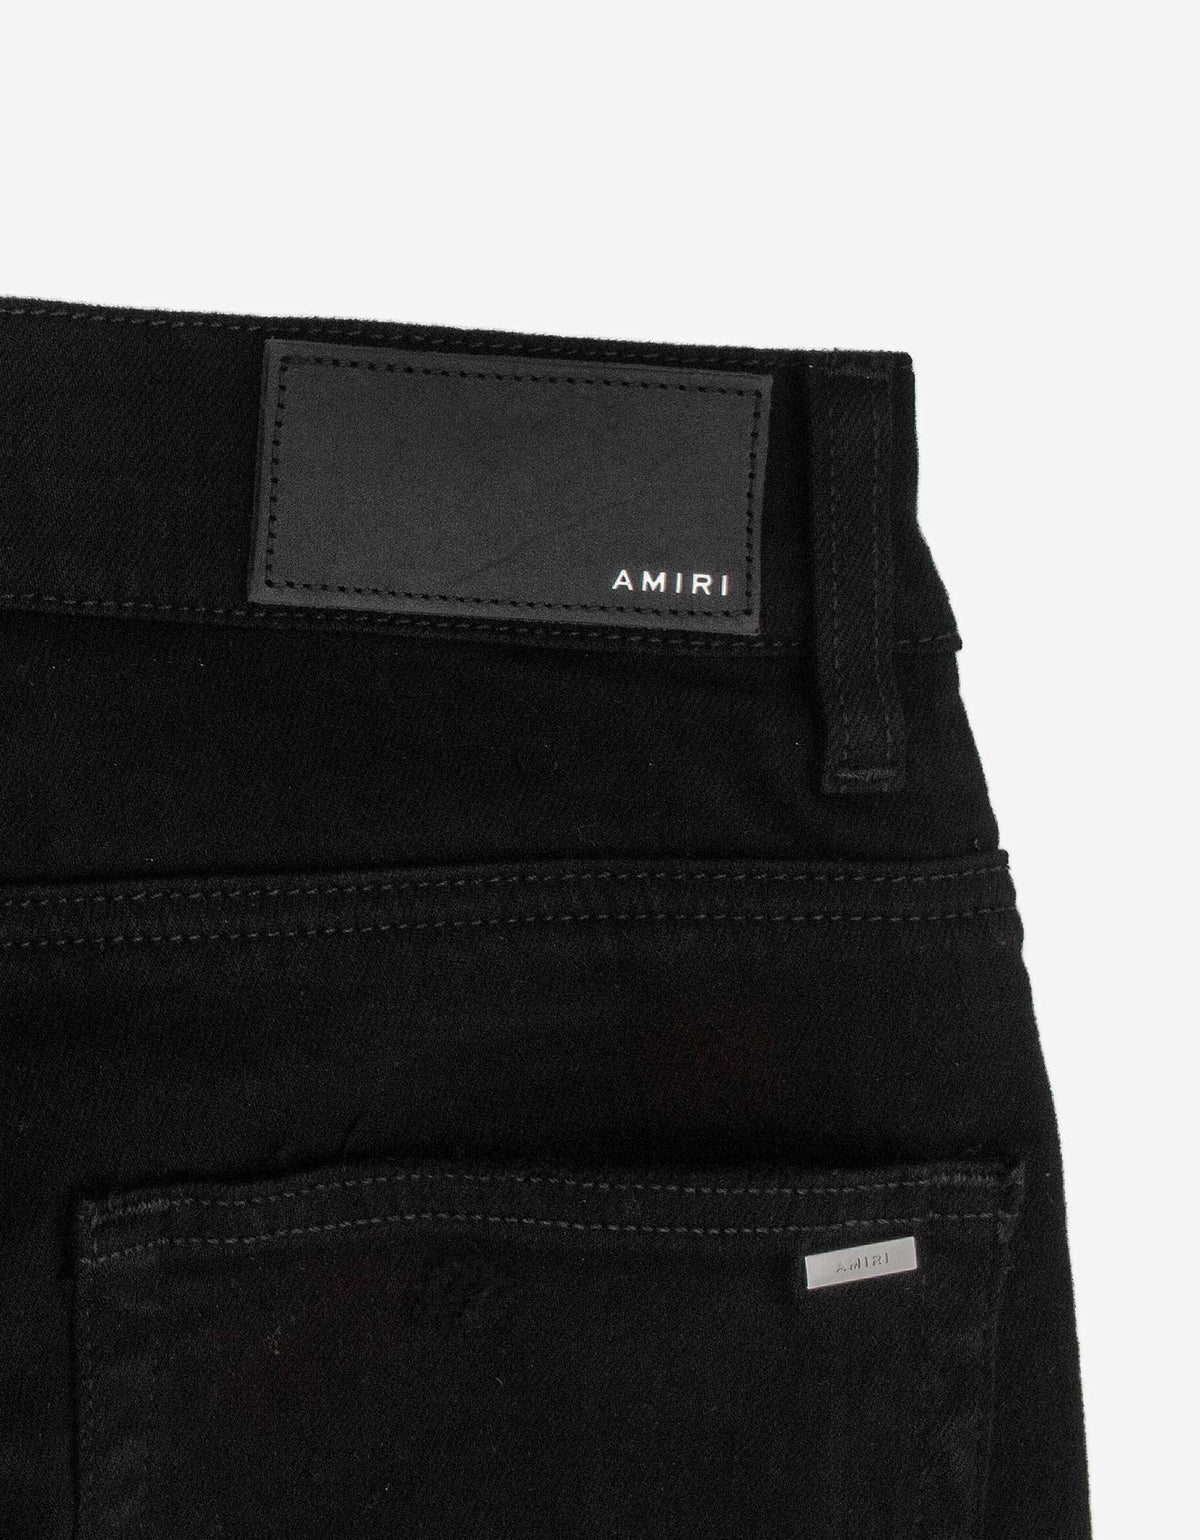 Amiri MX1 Black Leather Insert Distressed Skinny Jeans